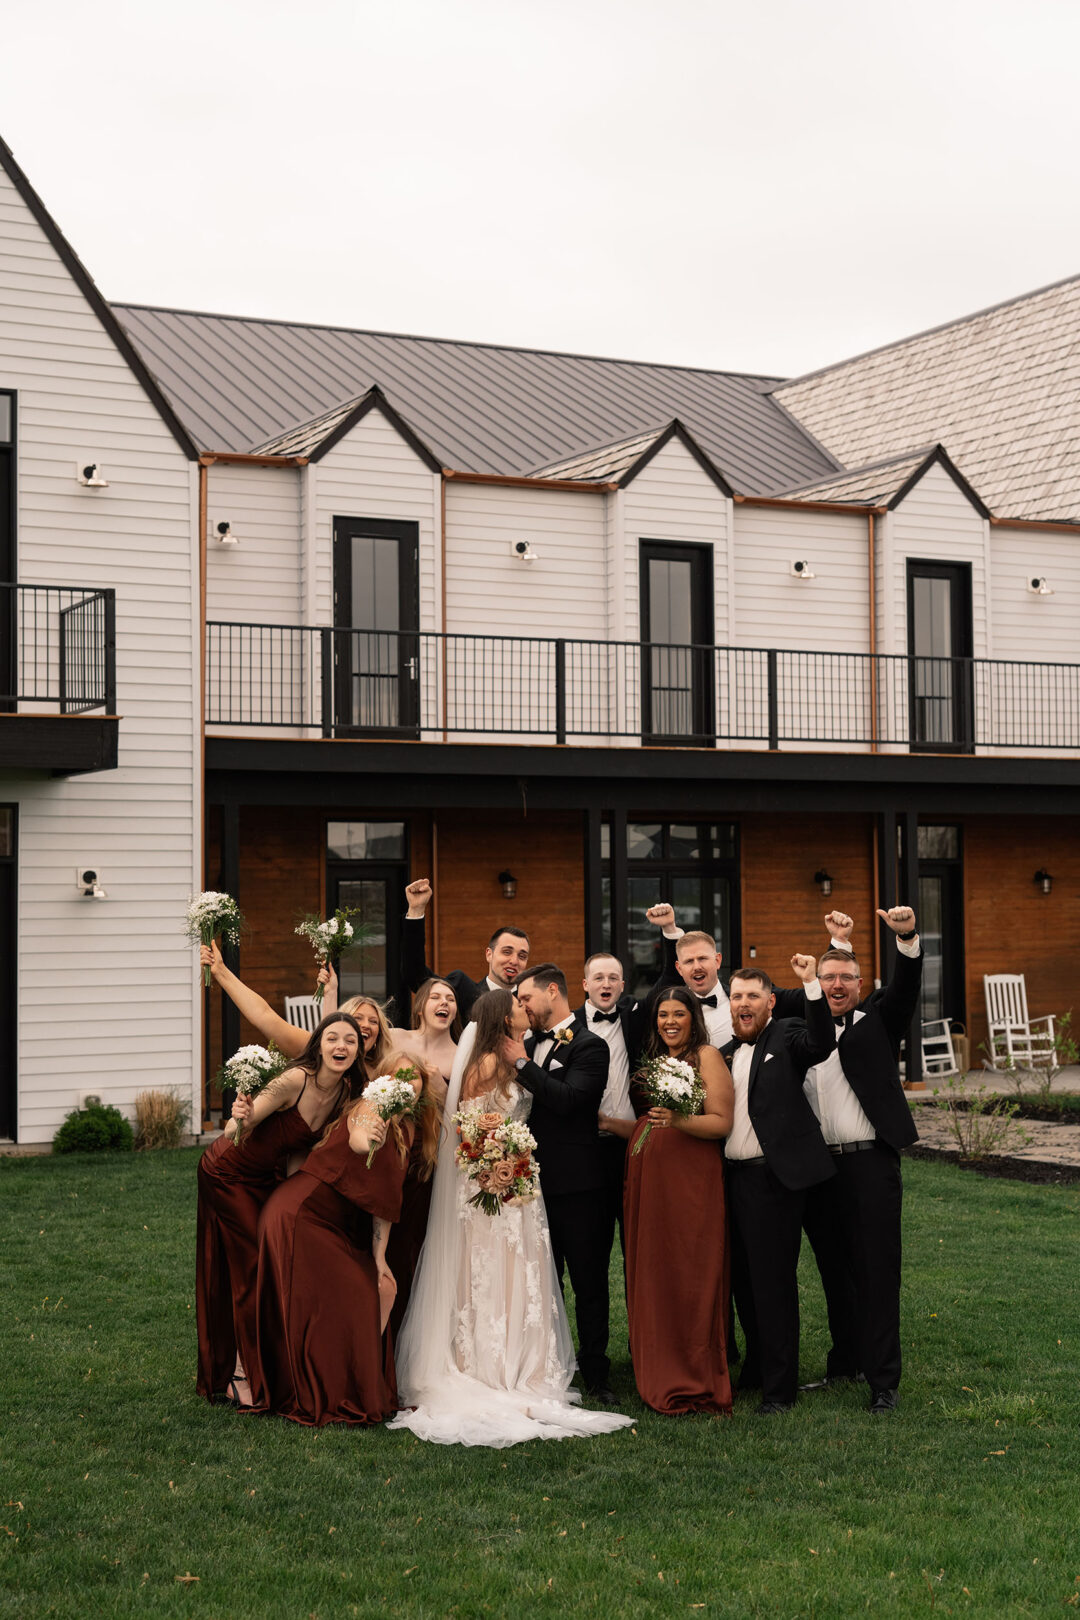 Best Iowa City Wedding Venues | A Wedding Photographer’s Guide